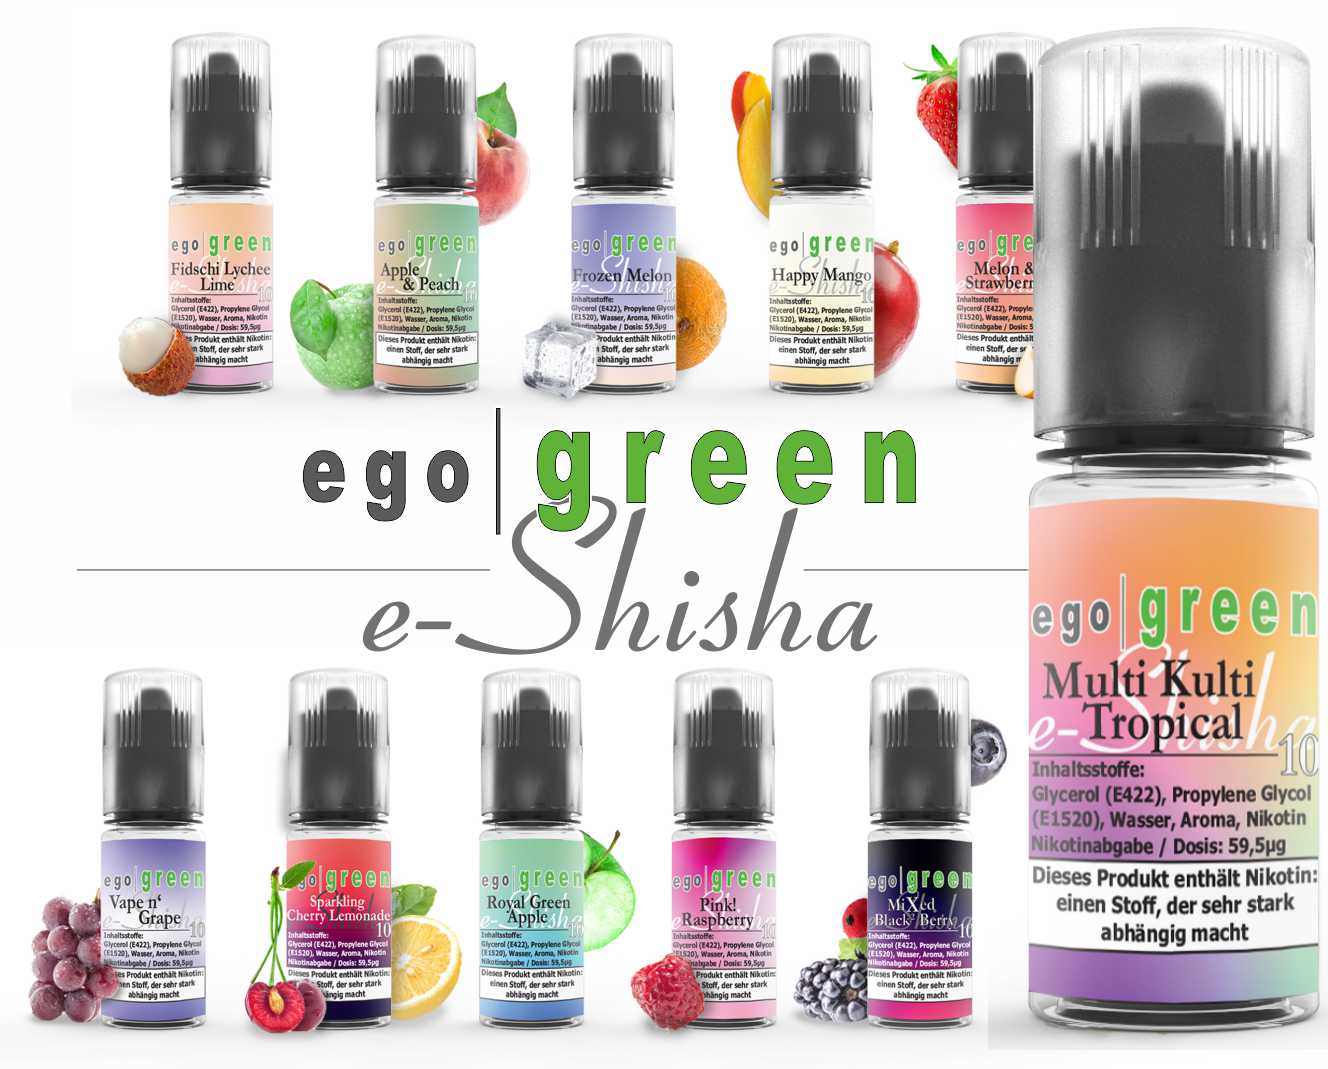 egogreen Multi Kulti Tropical e-Shisha Nikotinsalz Liquid kaufen